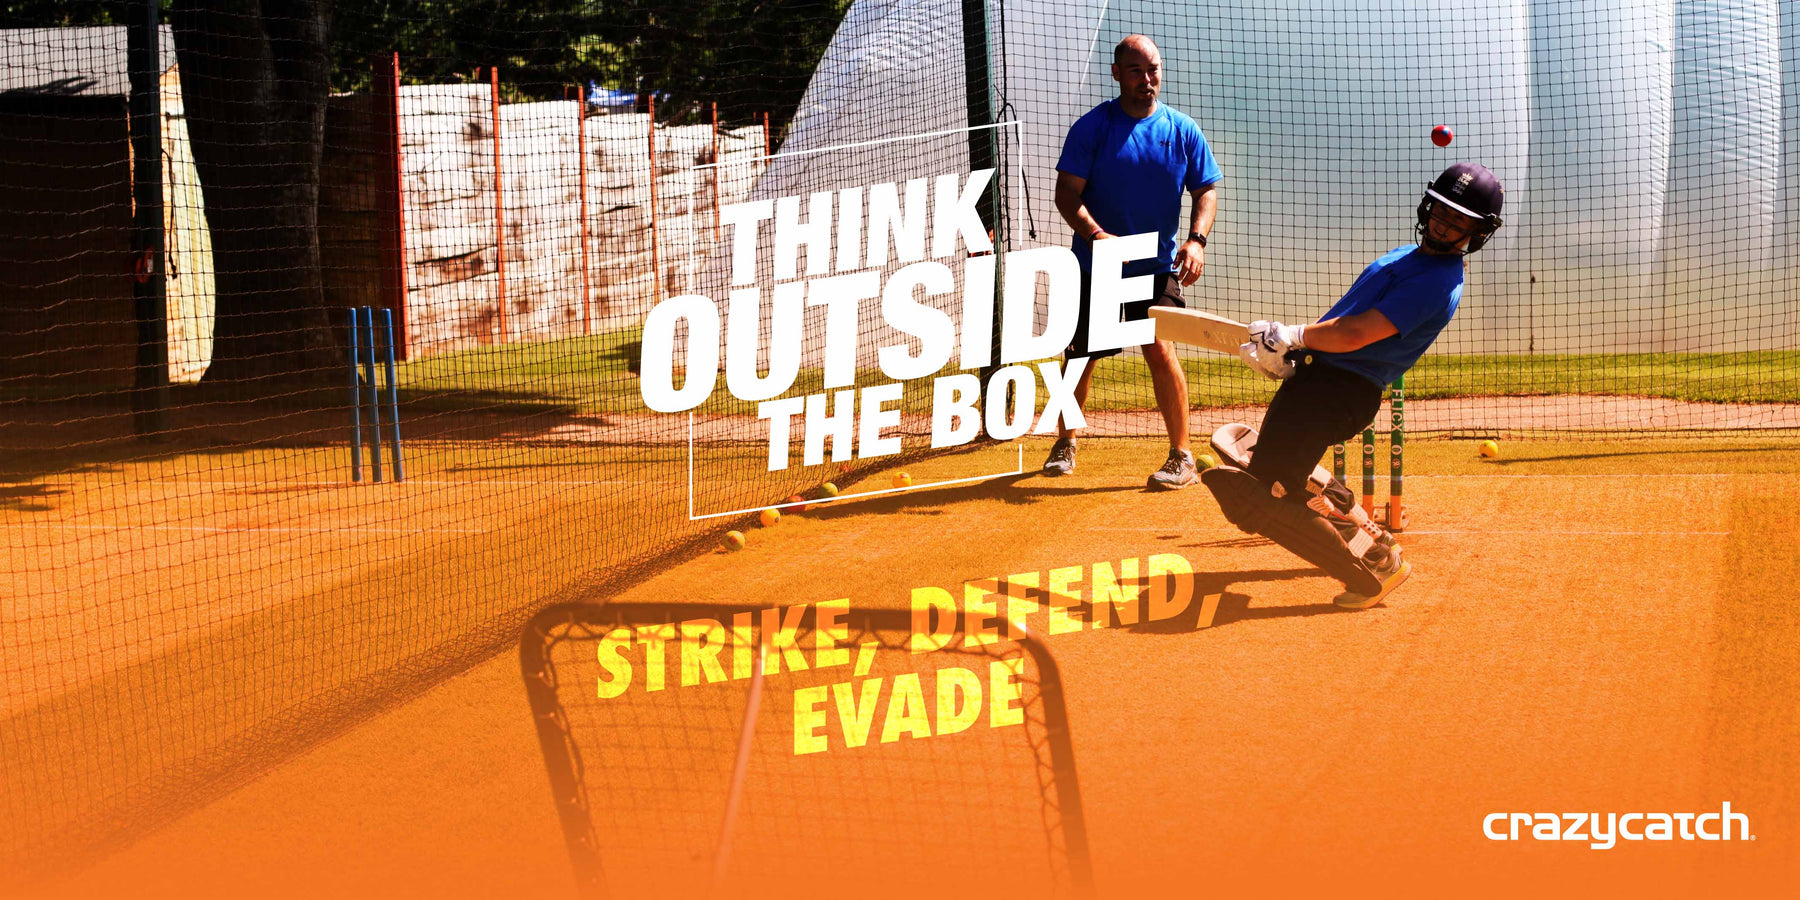 Strike, Defend, Evade - A Crazy Catch Cricket Drill